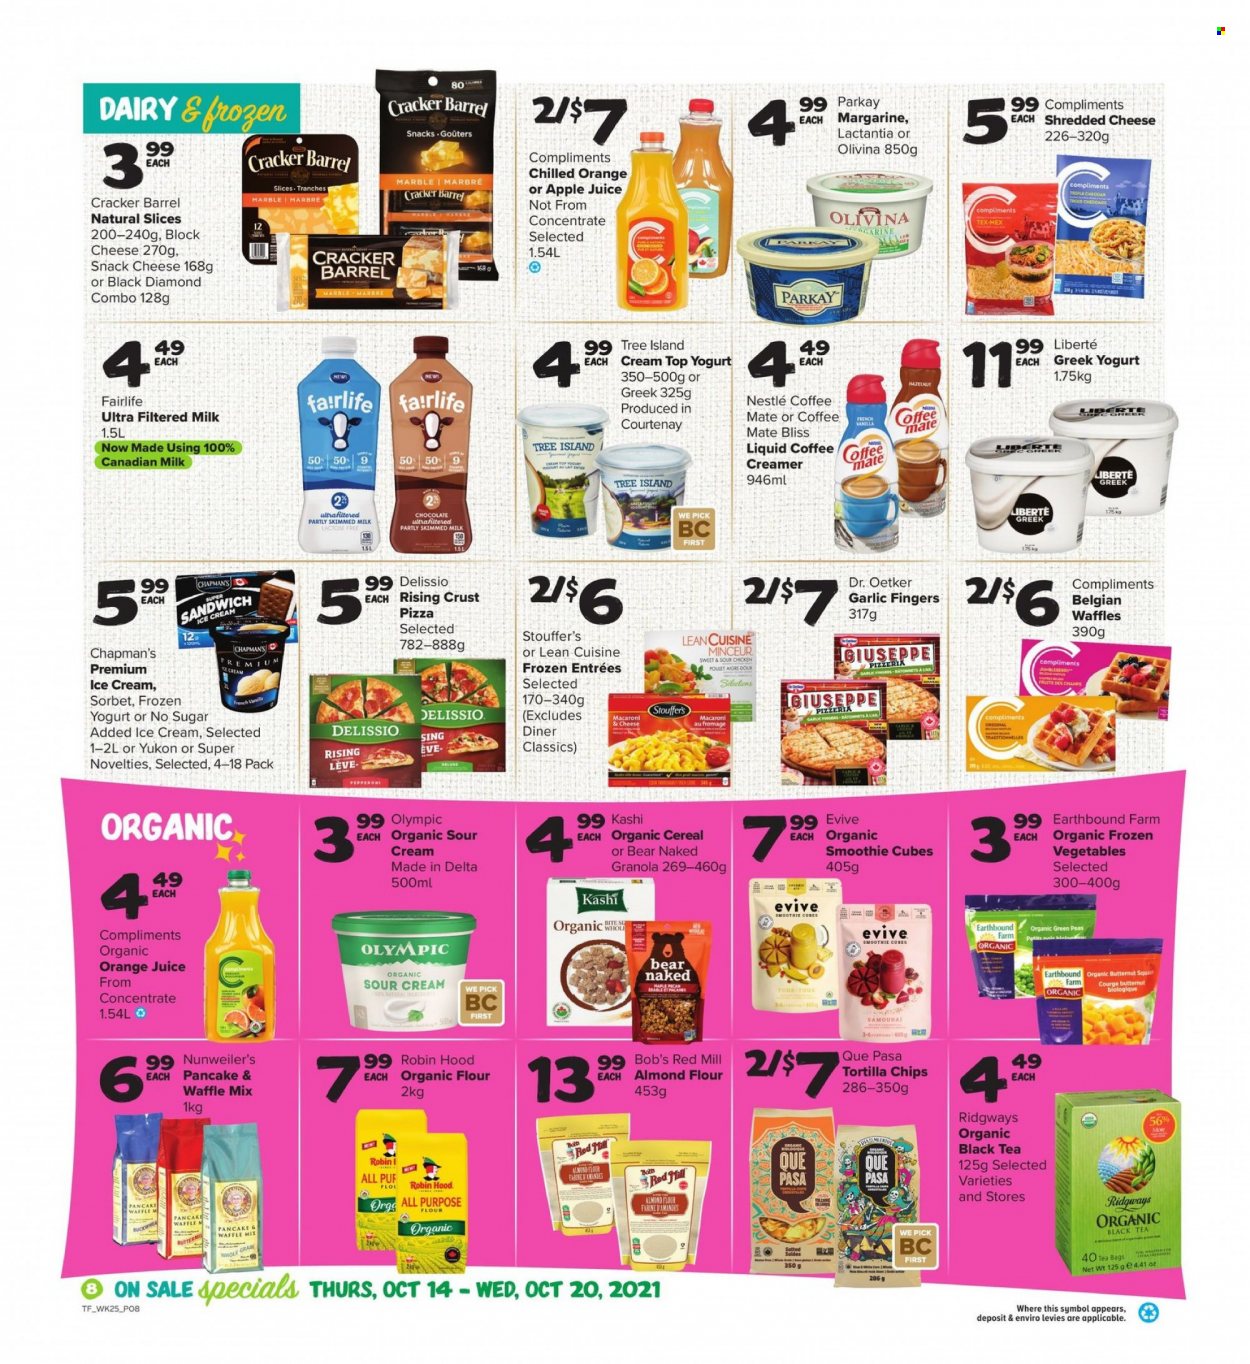 Thrifty Foods flyer  - October 14, 2021 - October 20, 2021.